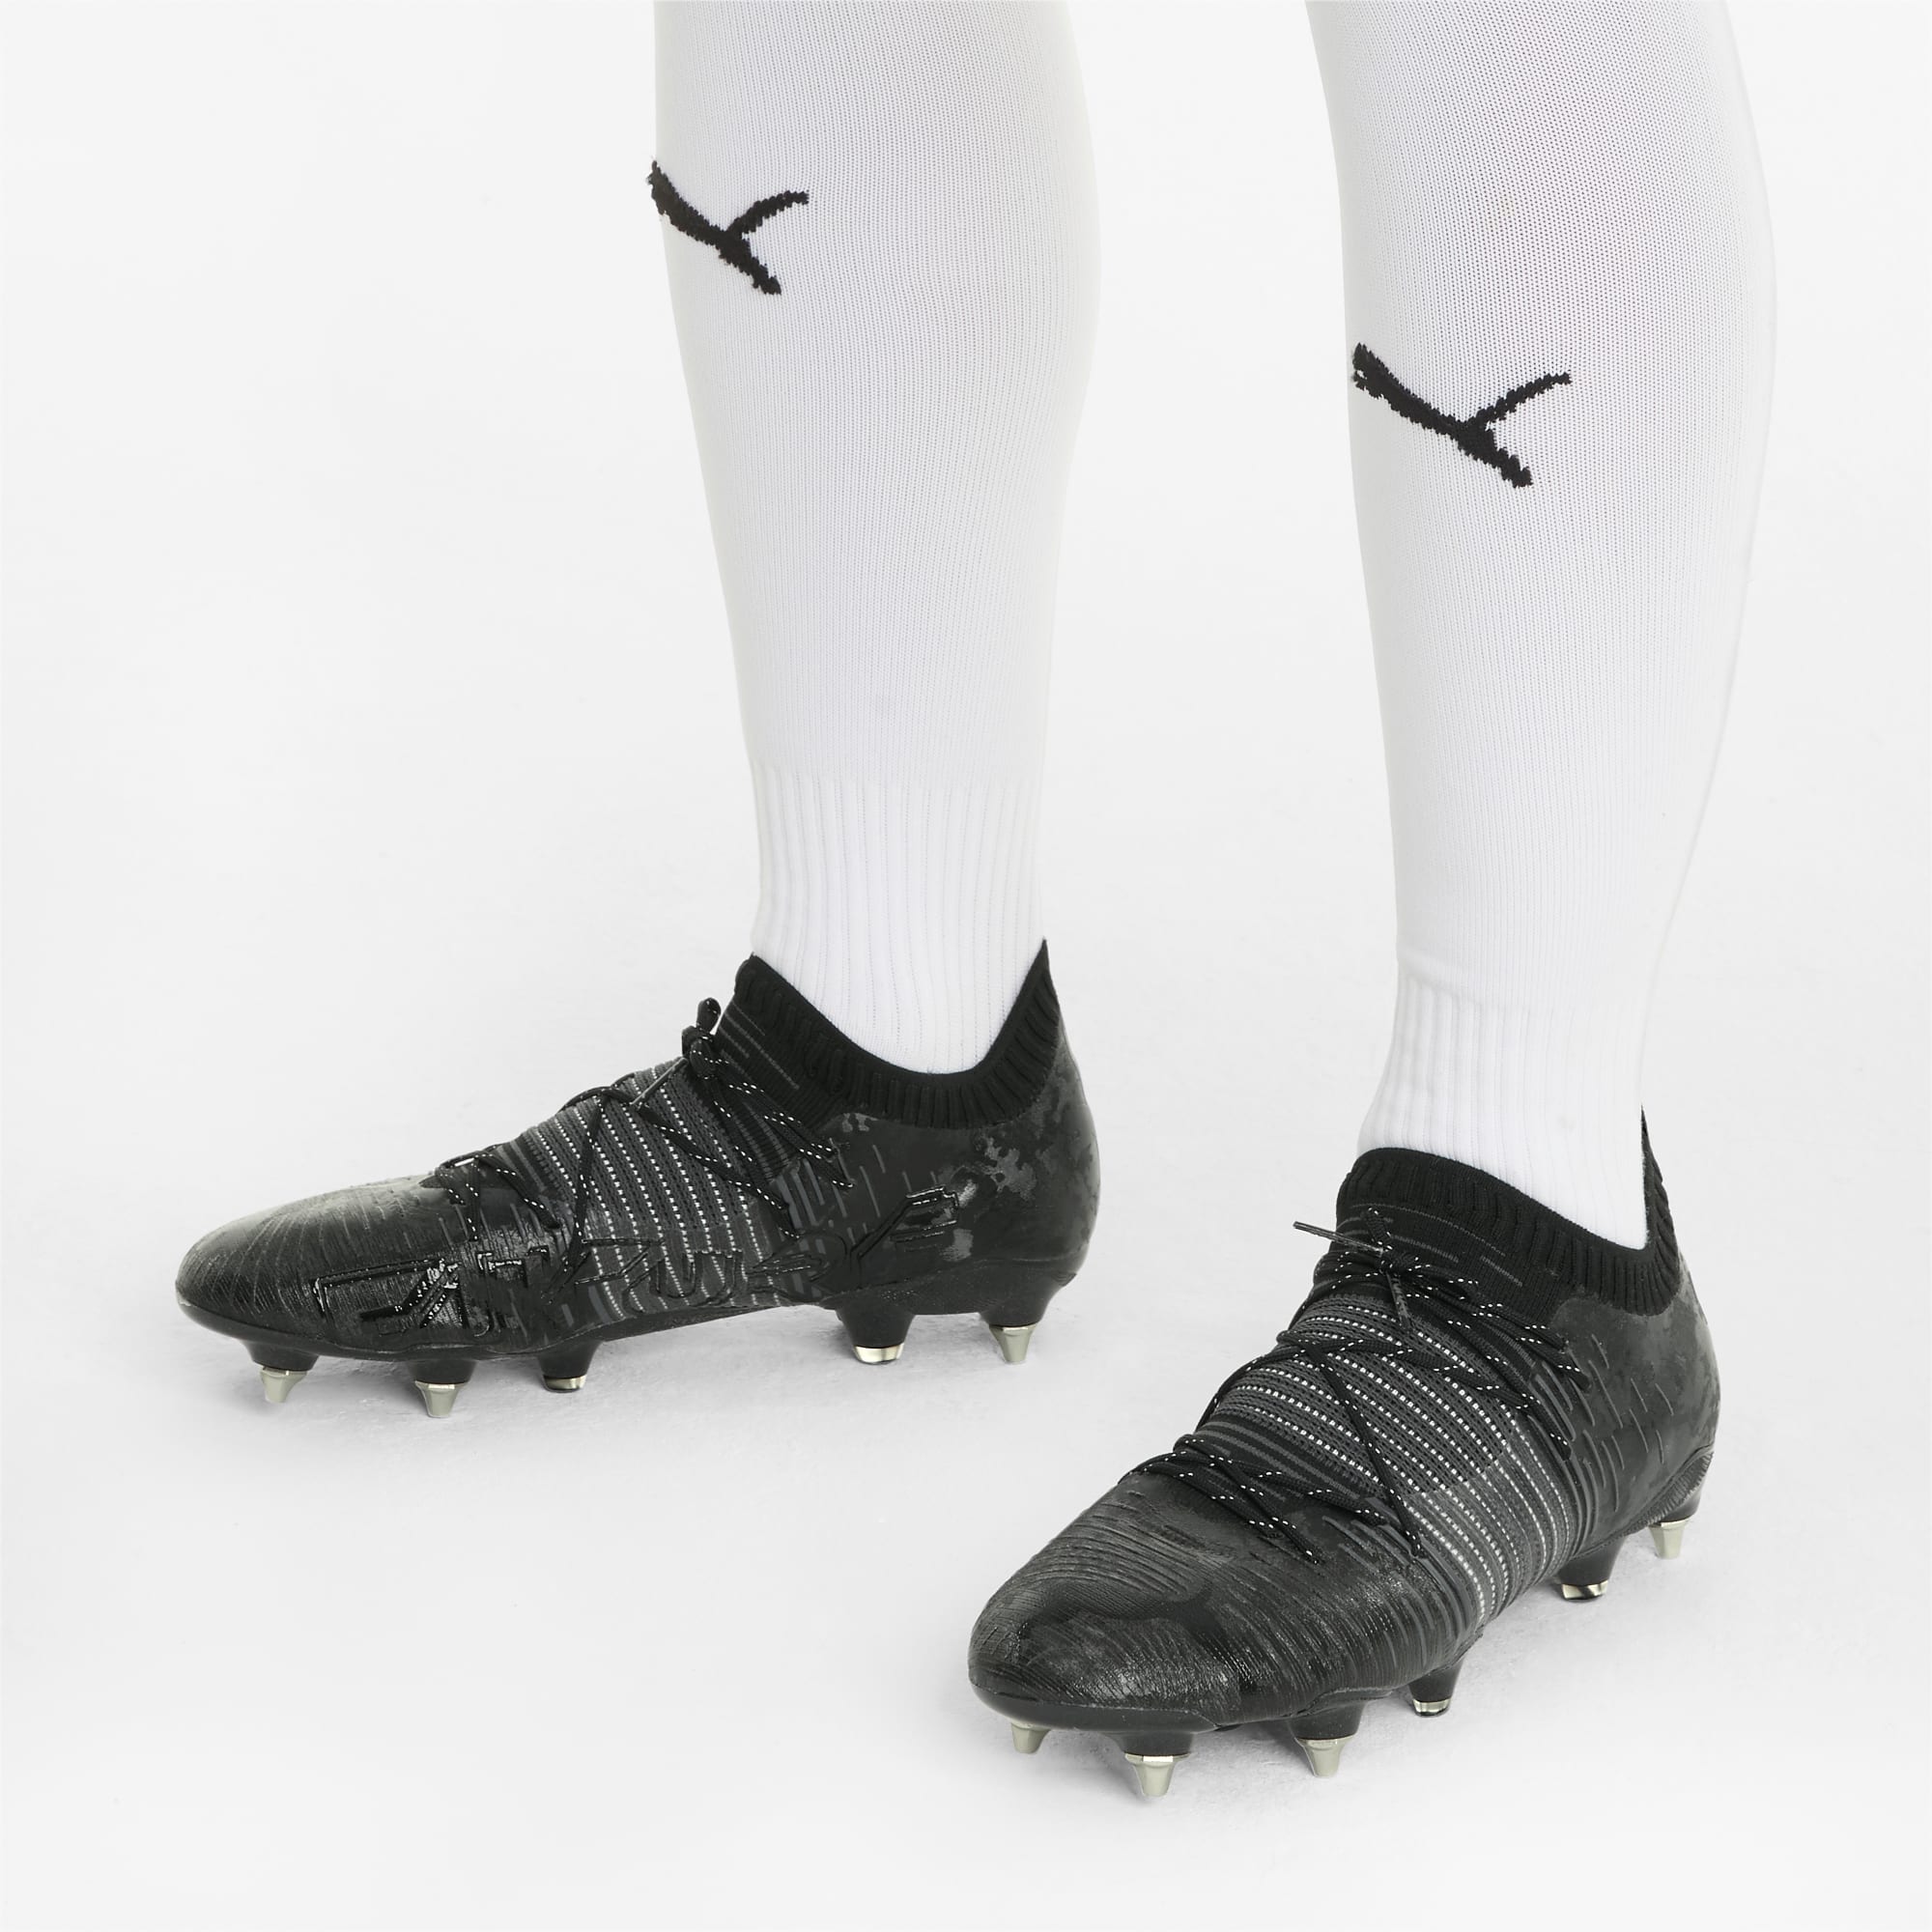 FUTURE Z 1.1 MxSG Men's Football Boots